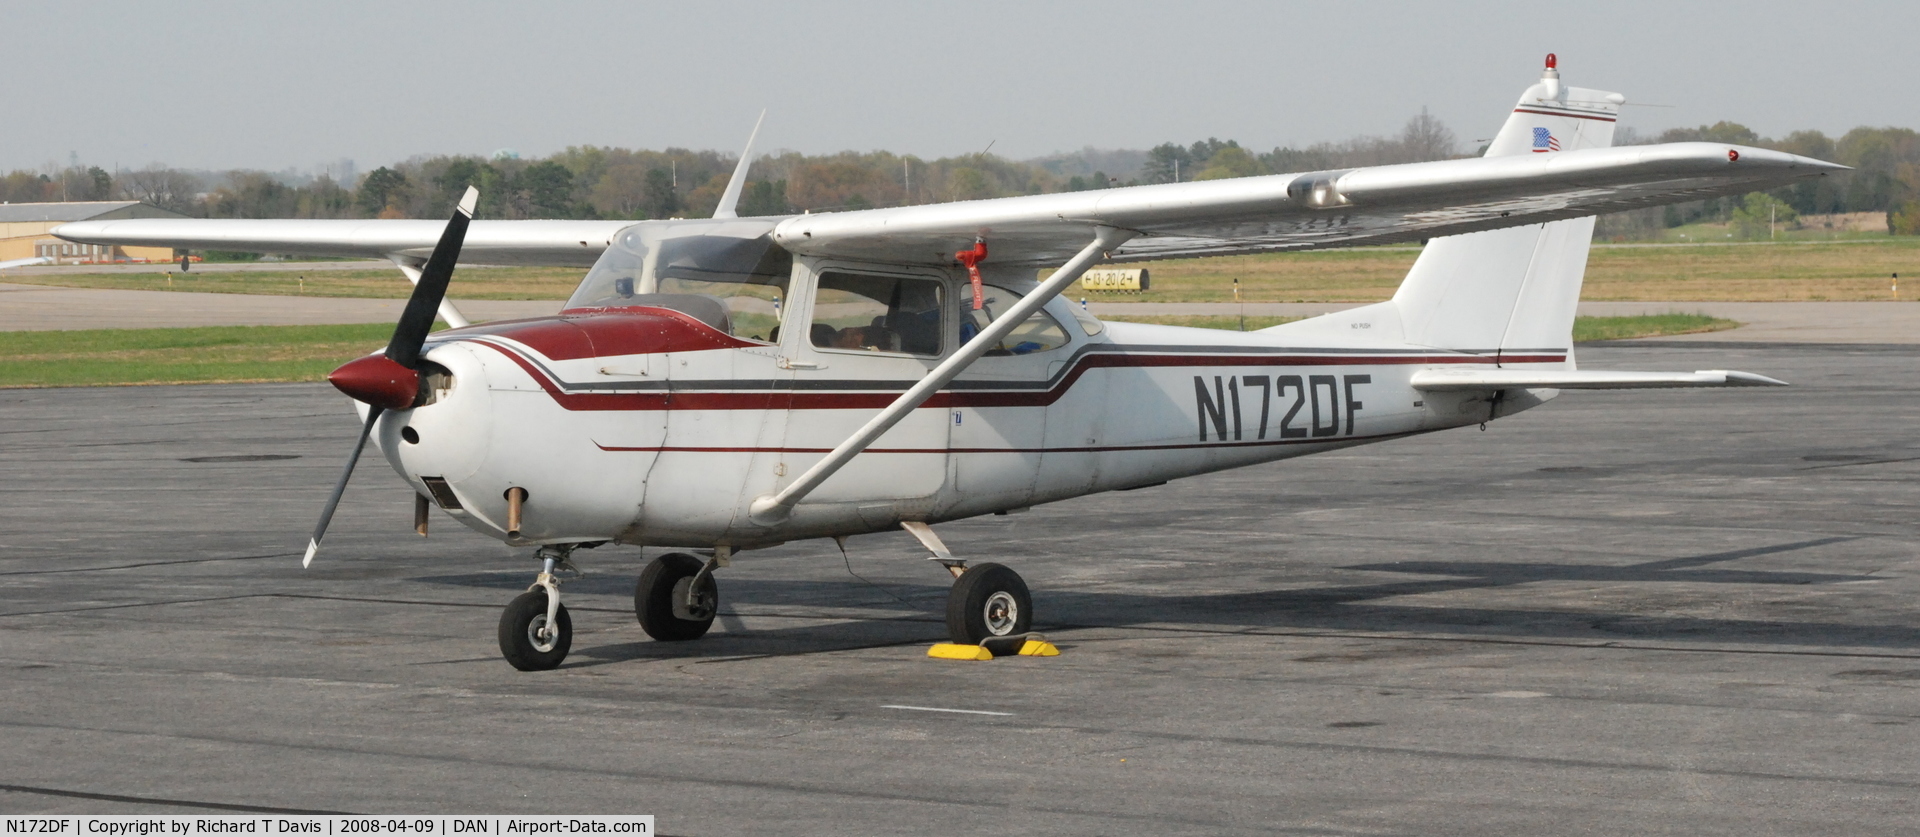 N172DF, 1963 Cessna 172E C/N 17250946,  1963 Cessna 172E  in Danville Va. for rest and fuel.